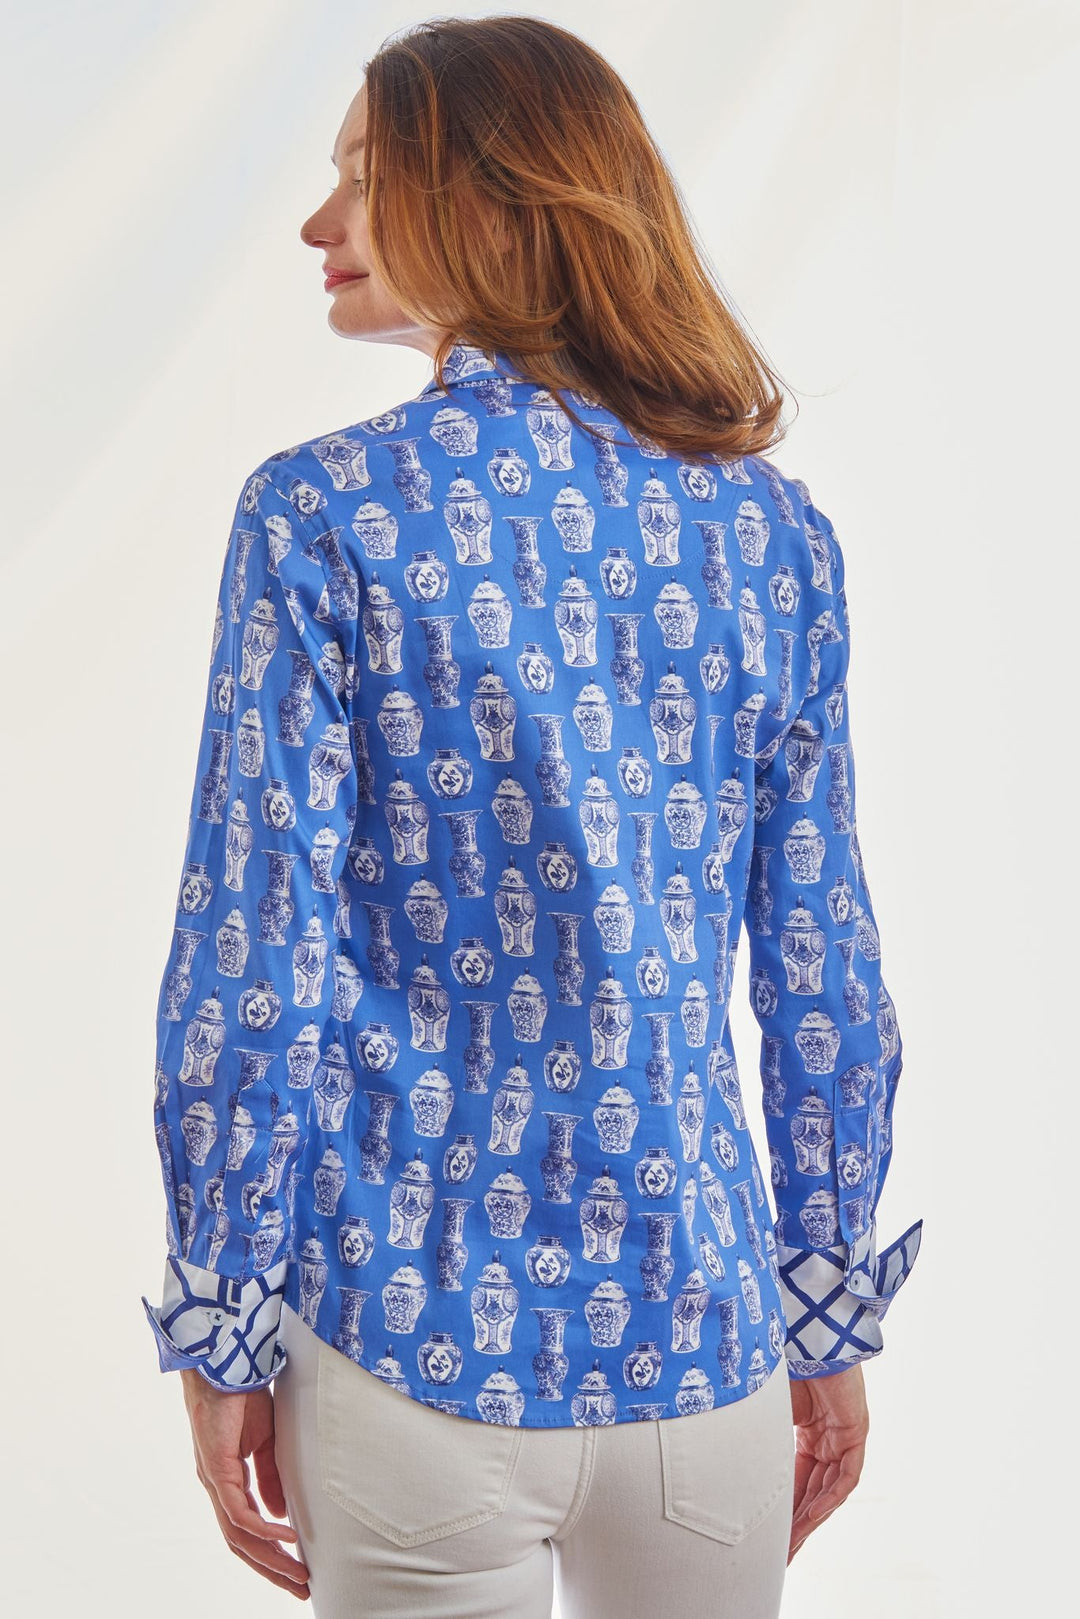 Dizzy Lizzie Rome Shirt Chinoiserie Pattern